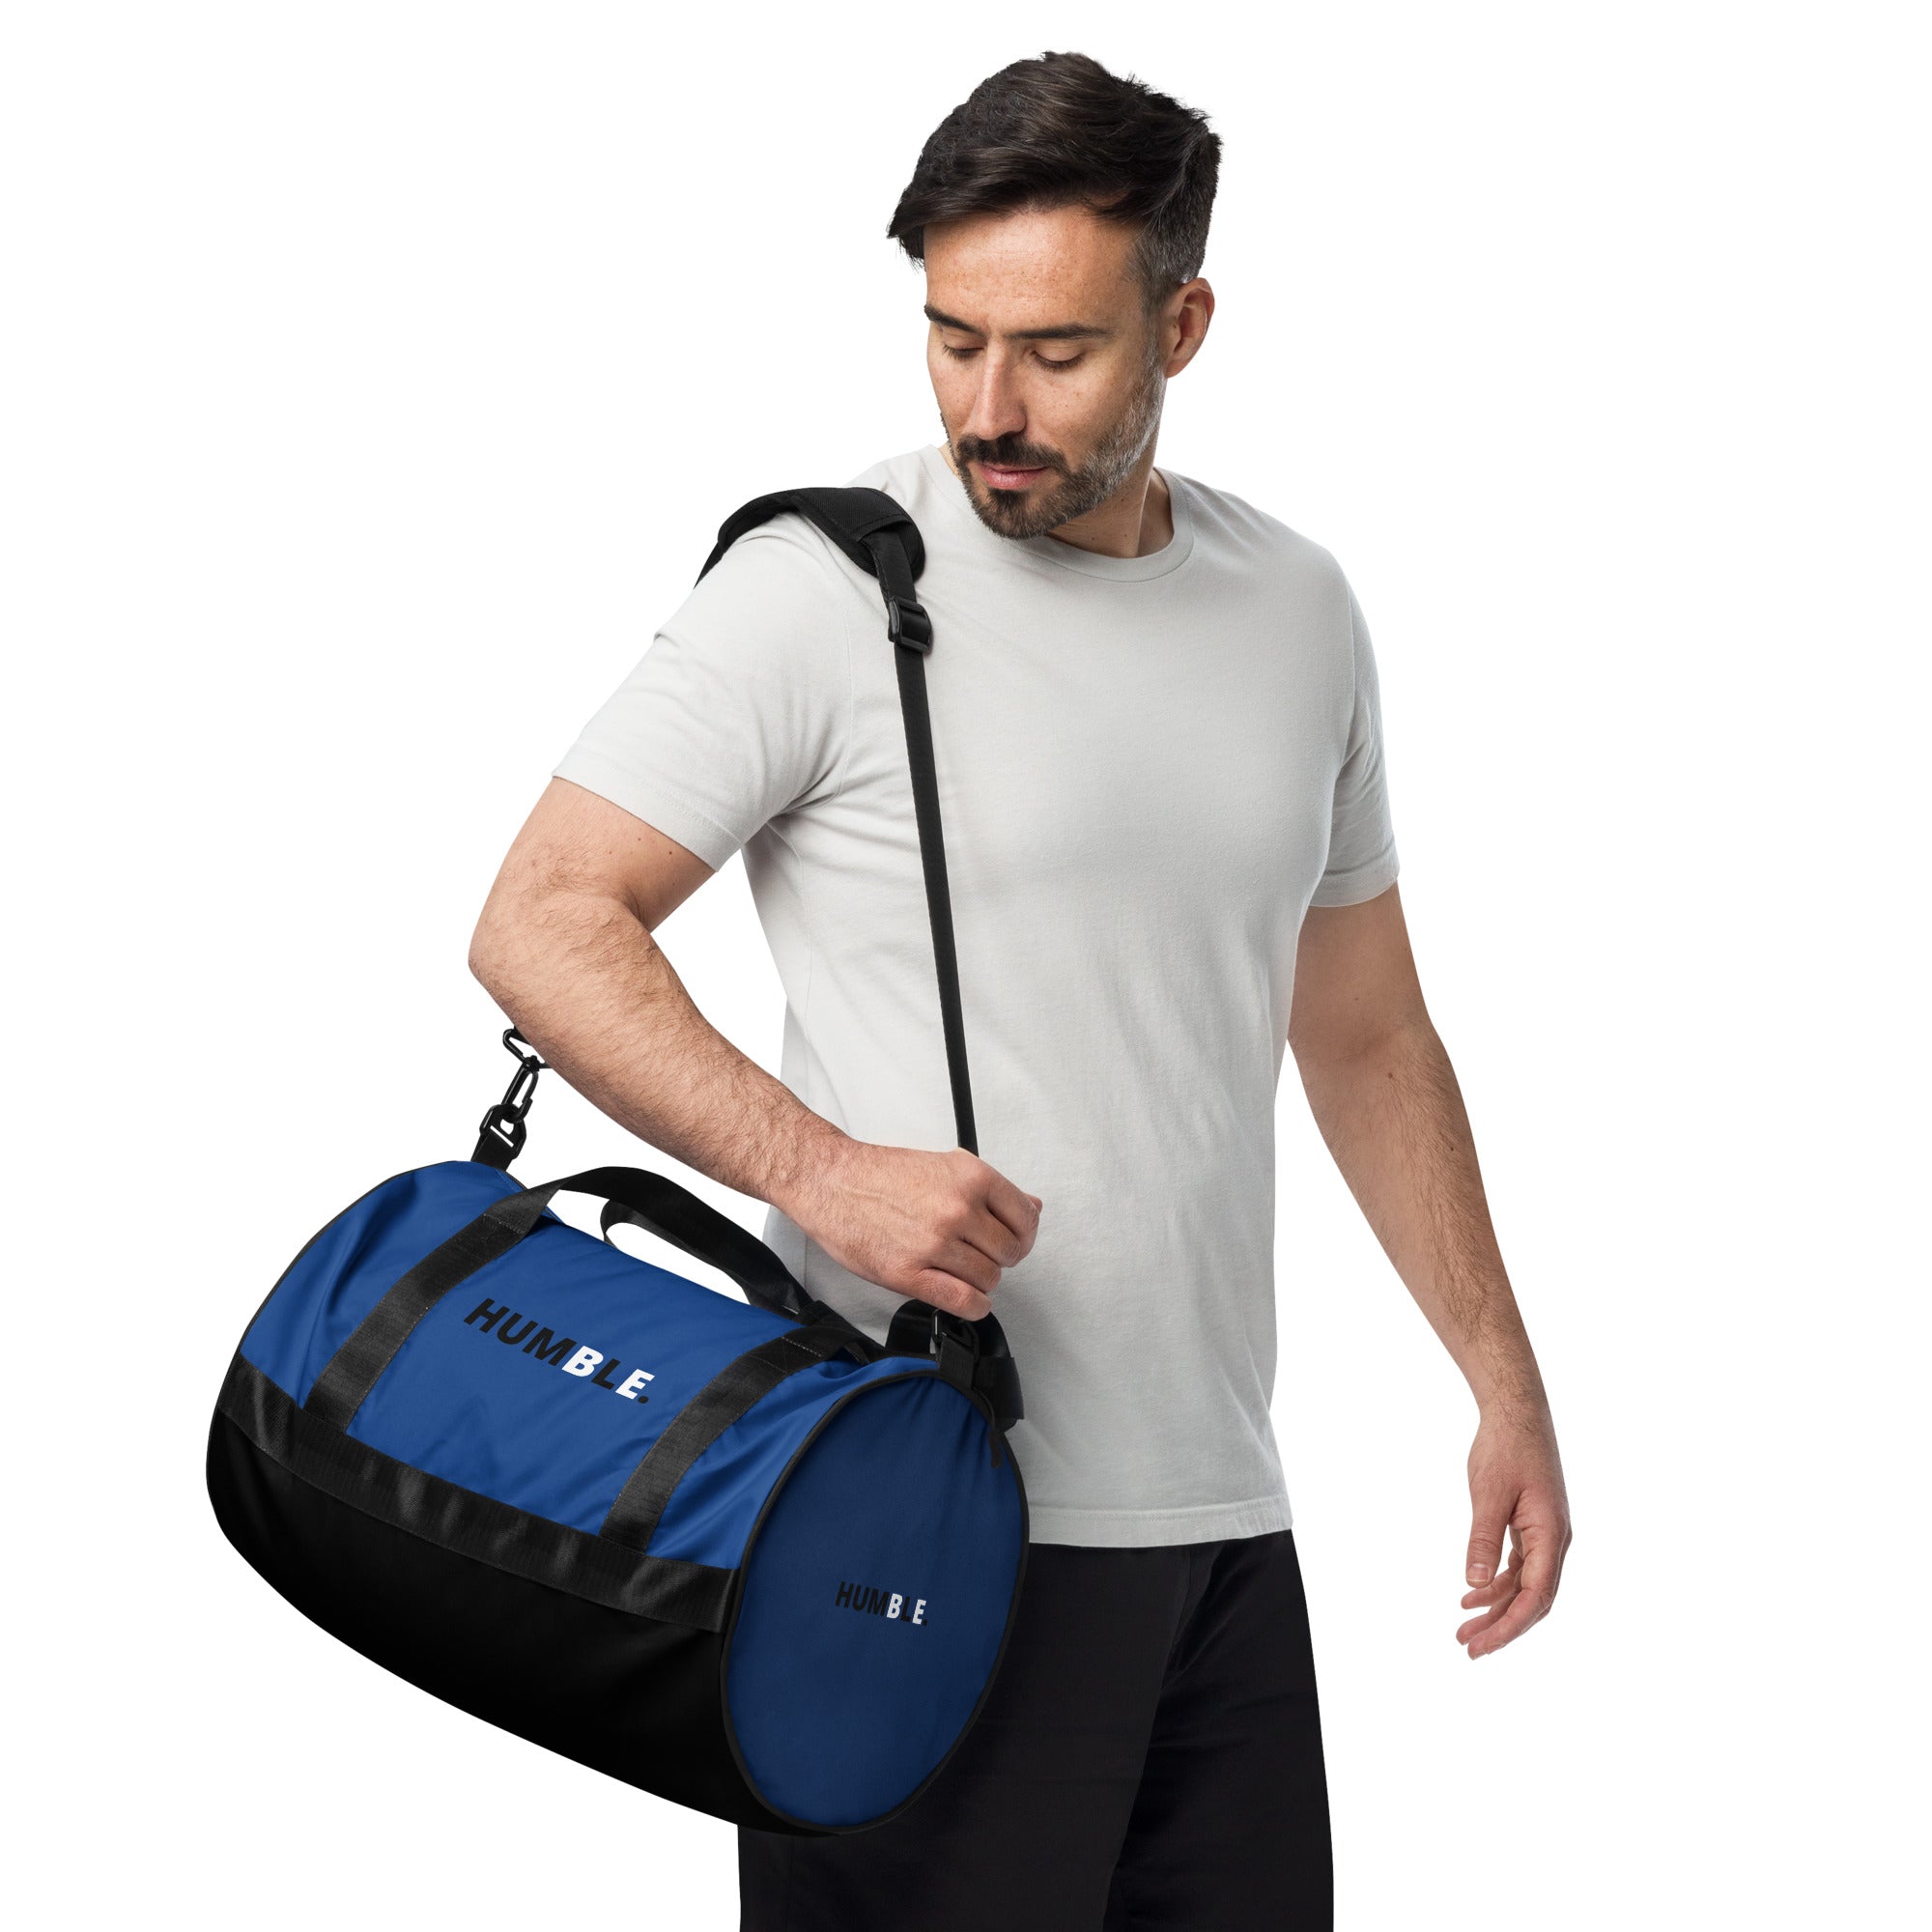 Blue/Black gym bag